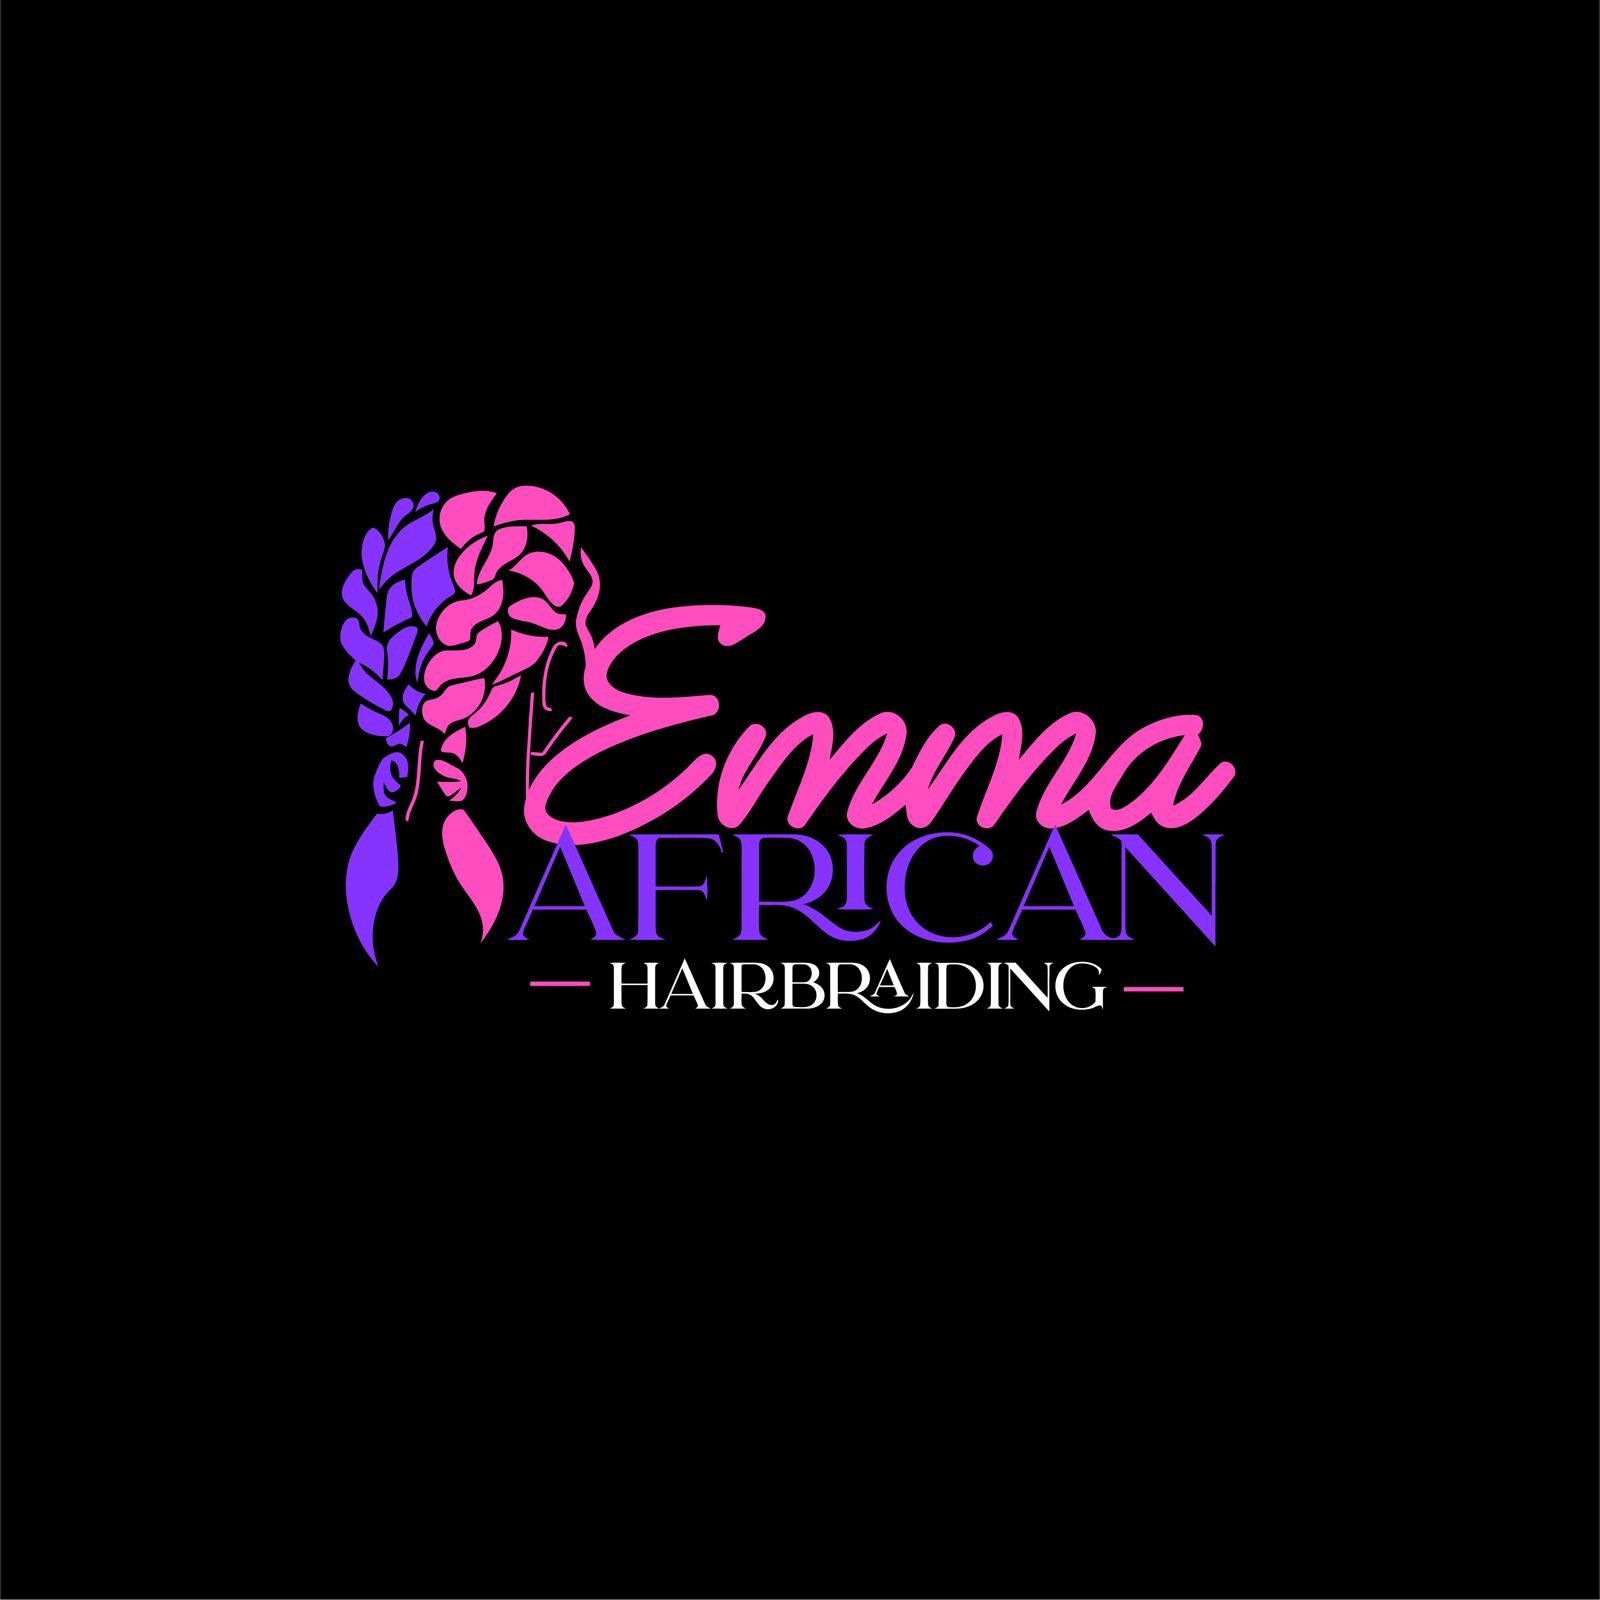 Emma African Hairbraid, 105 Vulcan Rd, #226, Birmingham, 35209